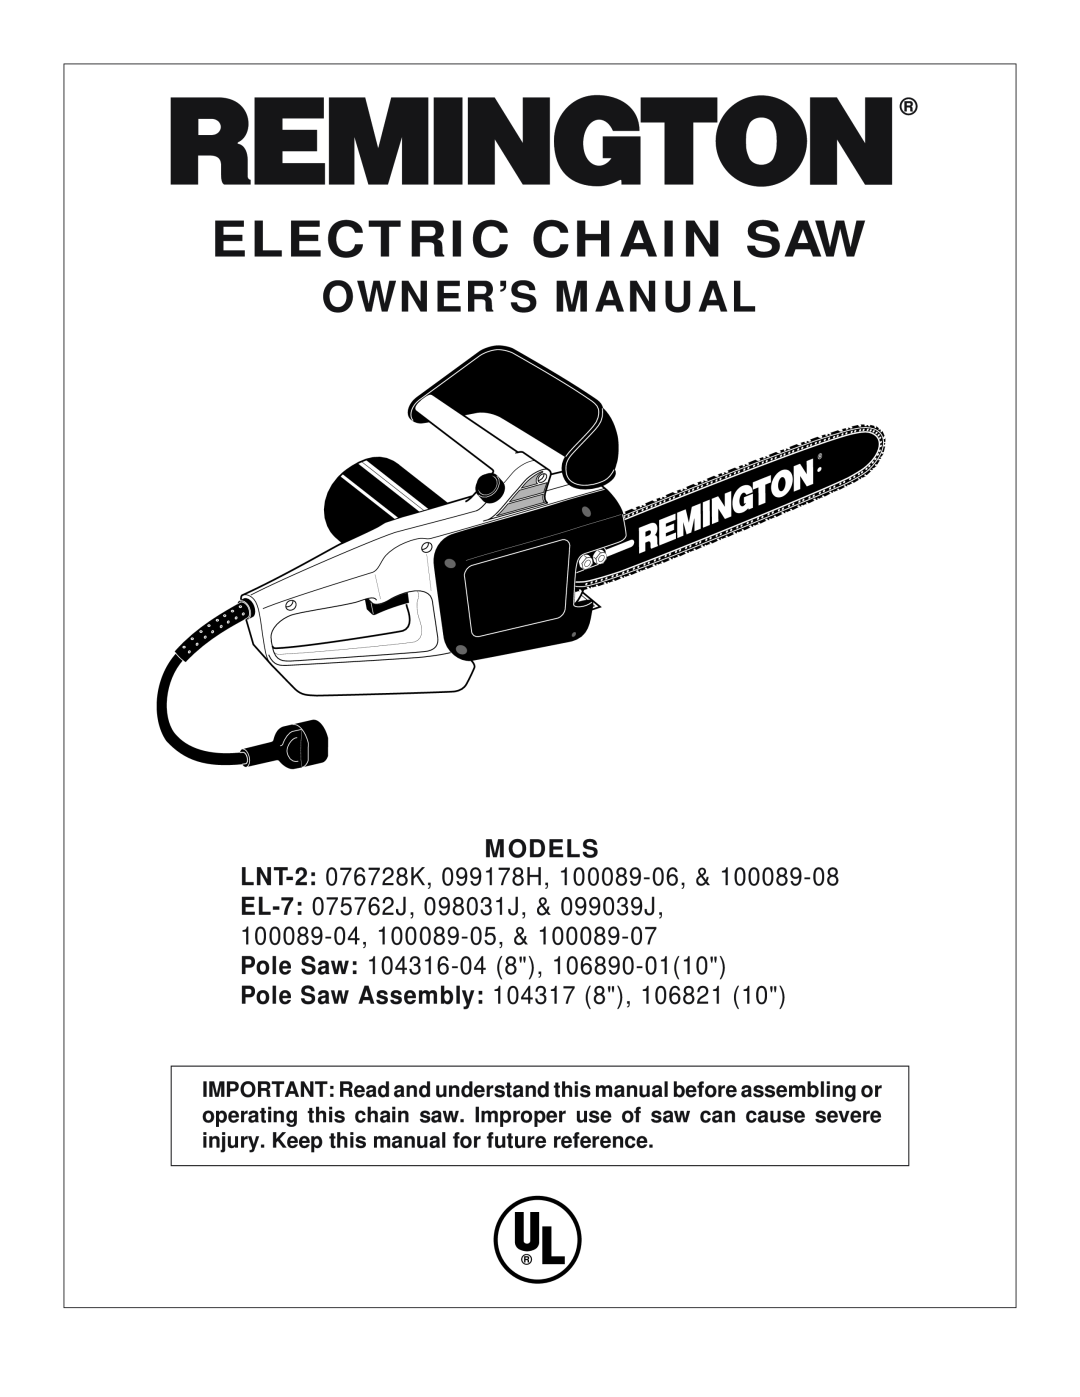 Desa 100089-07, LNT-2: 076728K owner manual Electric Chain Saw, Models, LNT-2 076728K, 099178H, Pole Saw Assembly 104317 